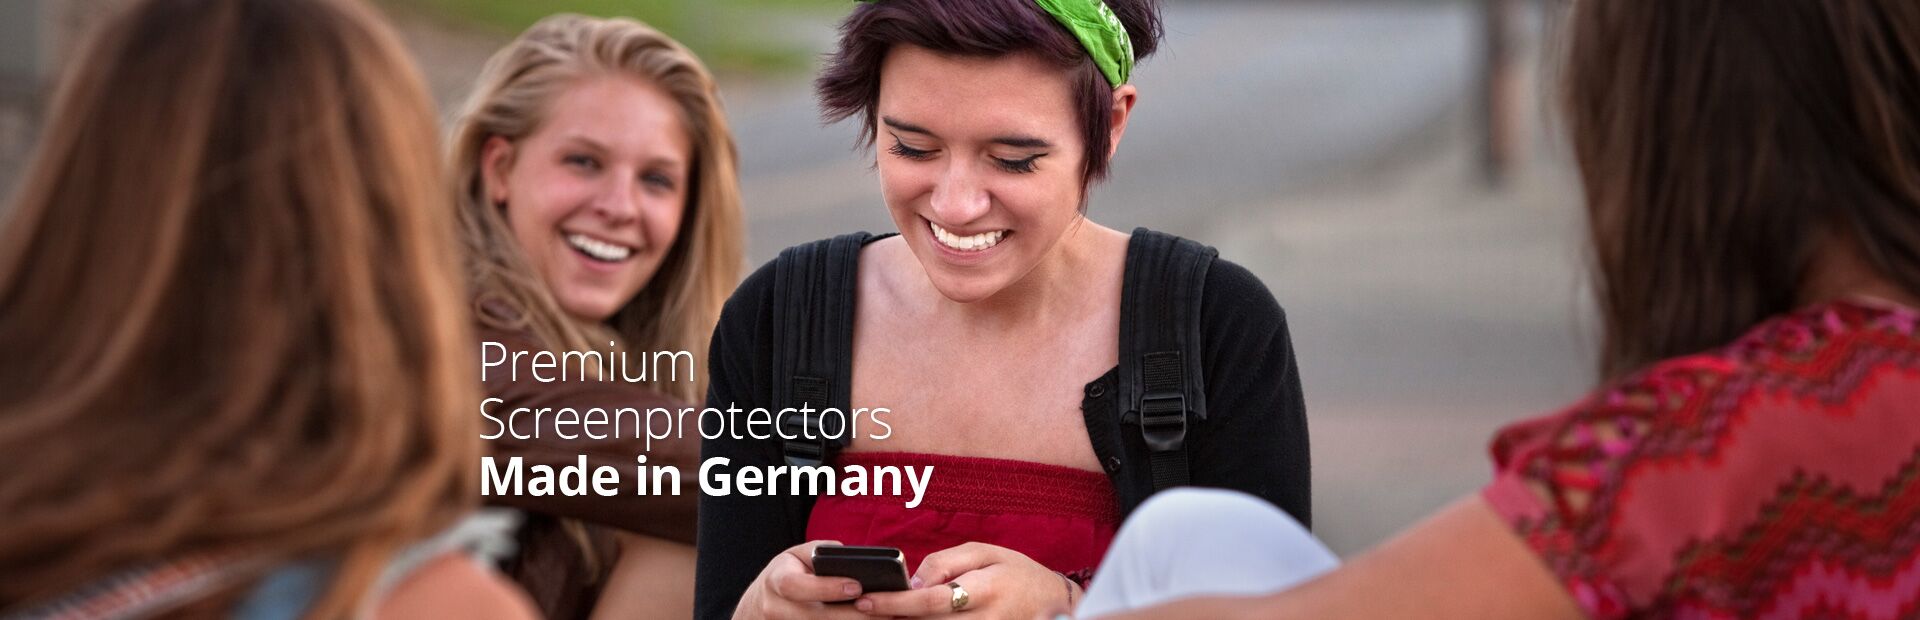 dipos Screenprotector made in Germany